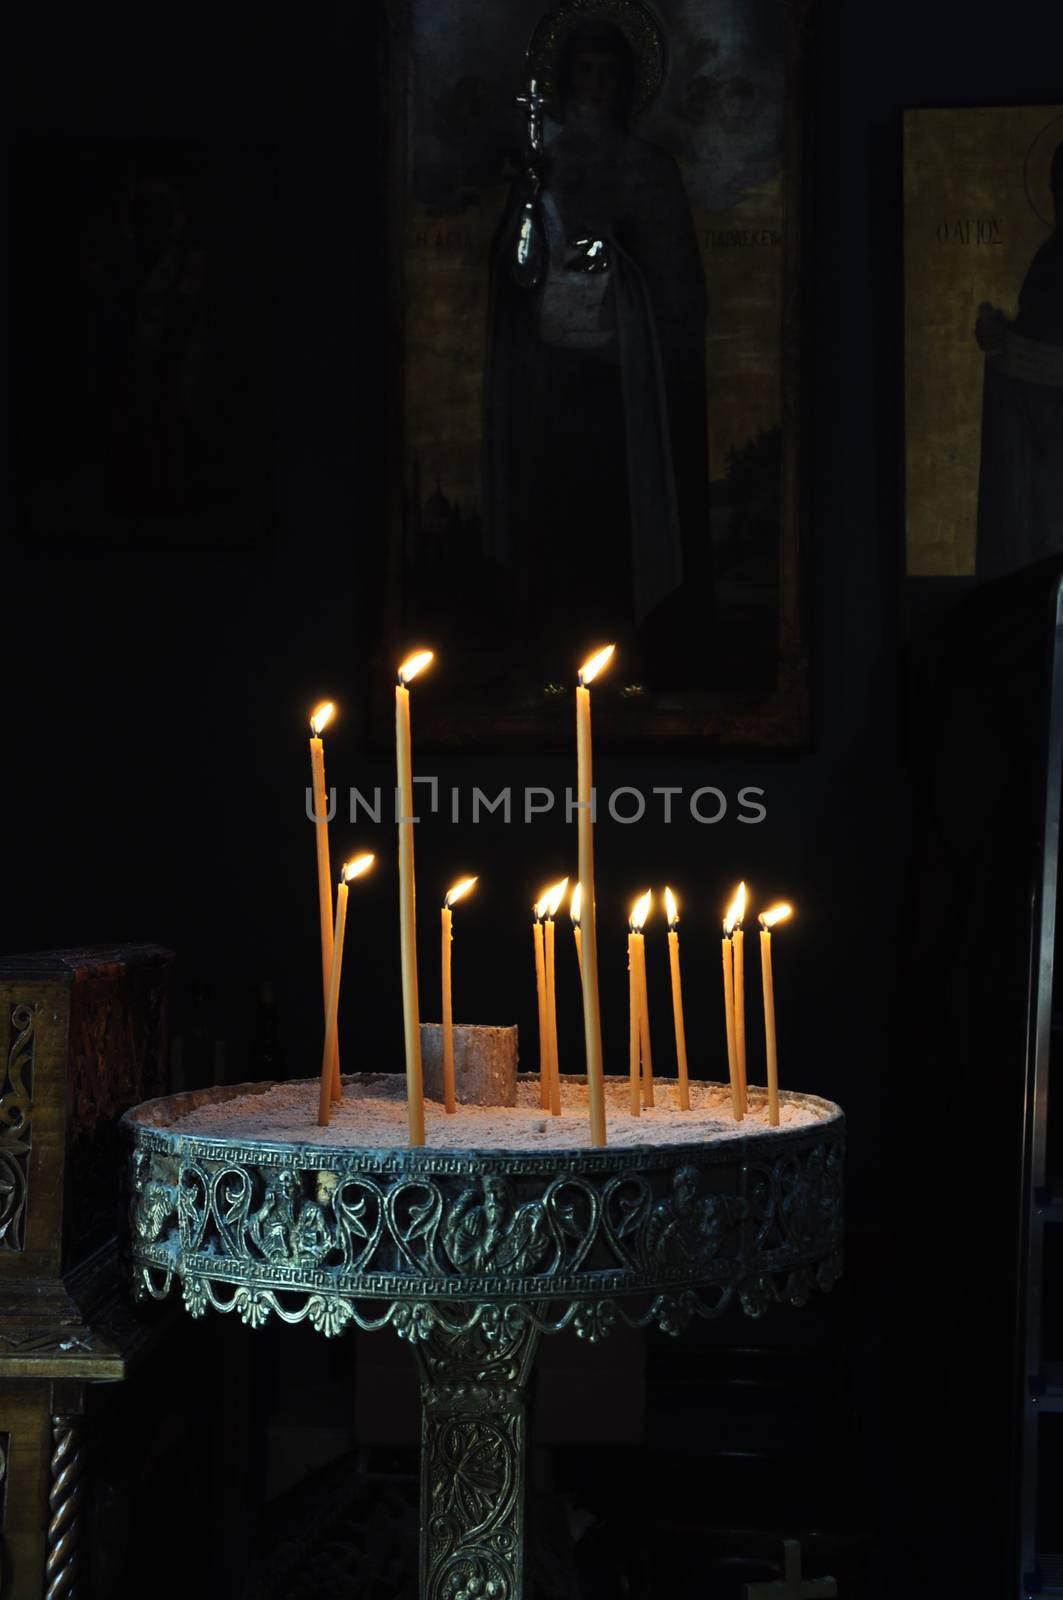 Vintage byzantine manouali candle stand in dark orthodox church interior.